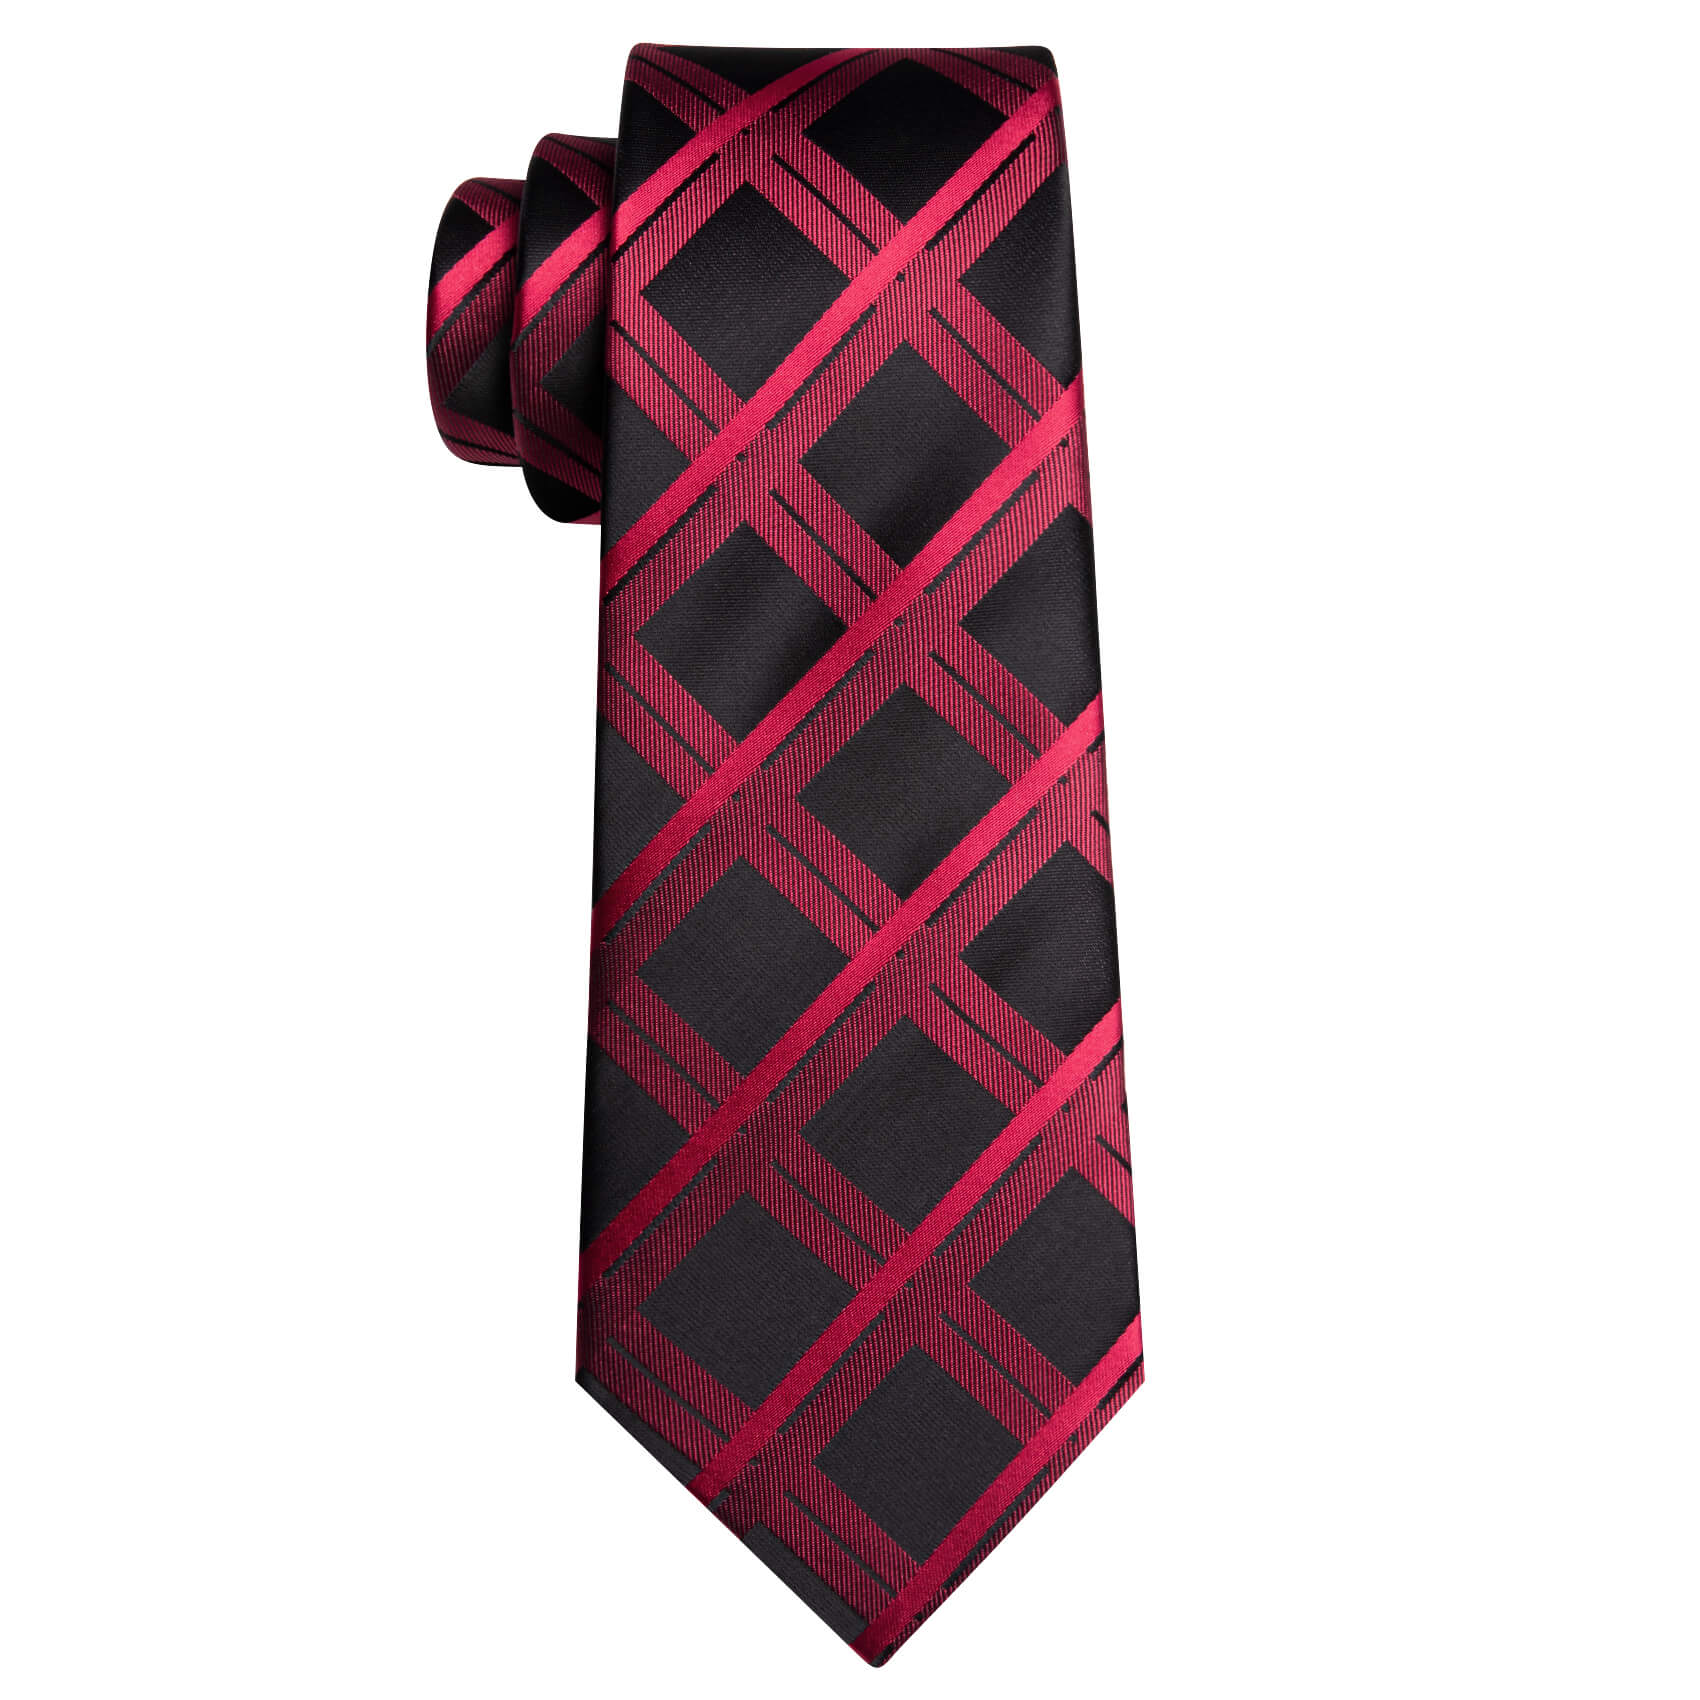 Barry.wang Plaid Tie Dark Red Black Silk Men's Tie Hanky Cufflinks Set